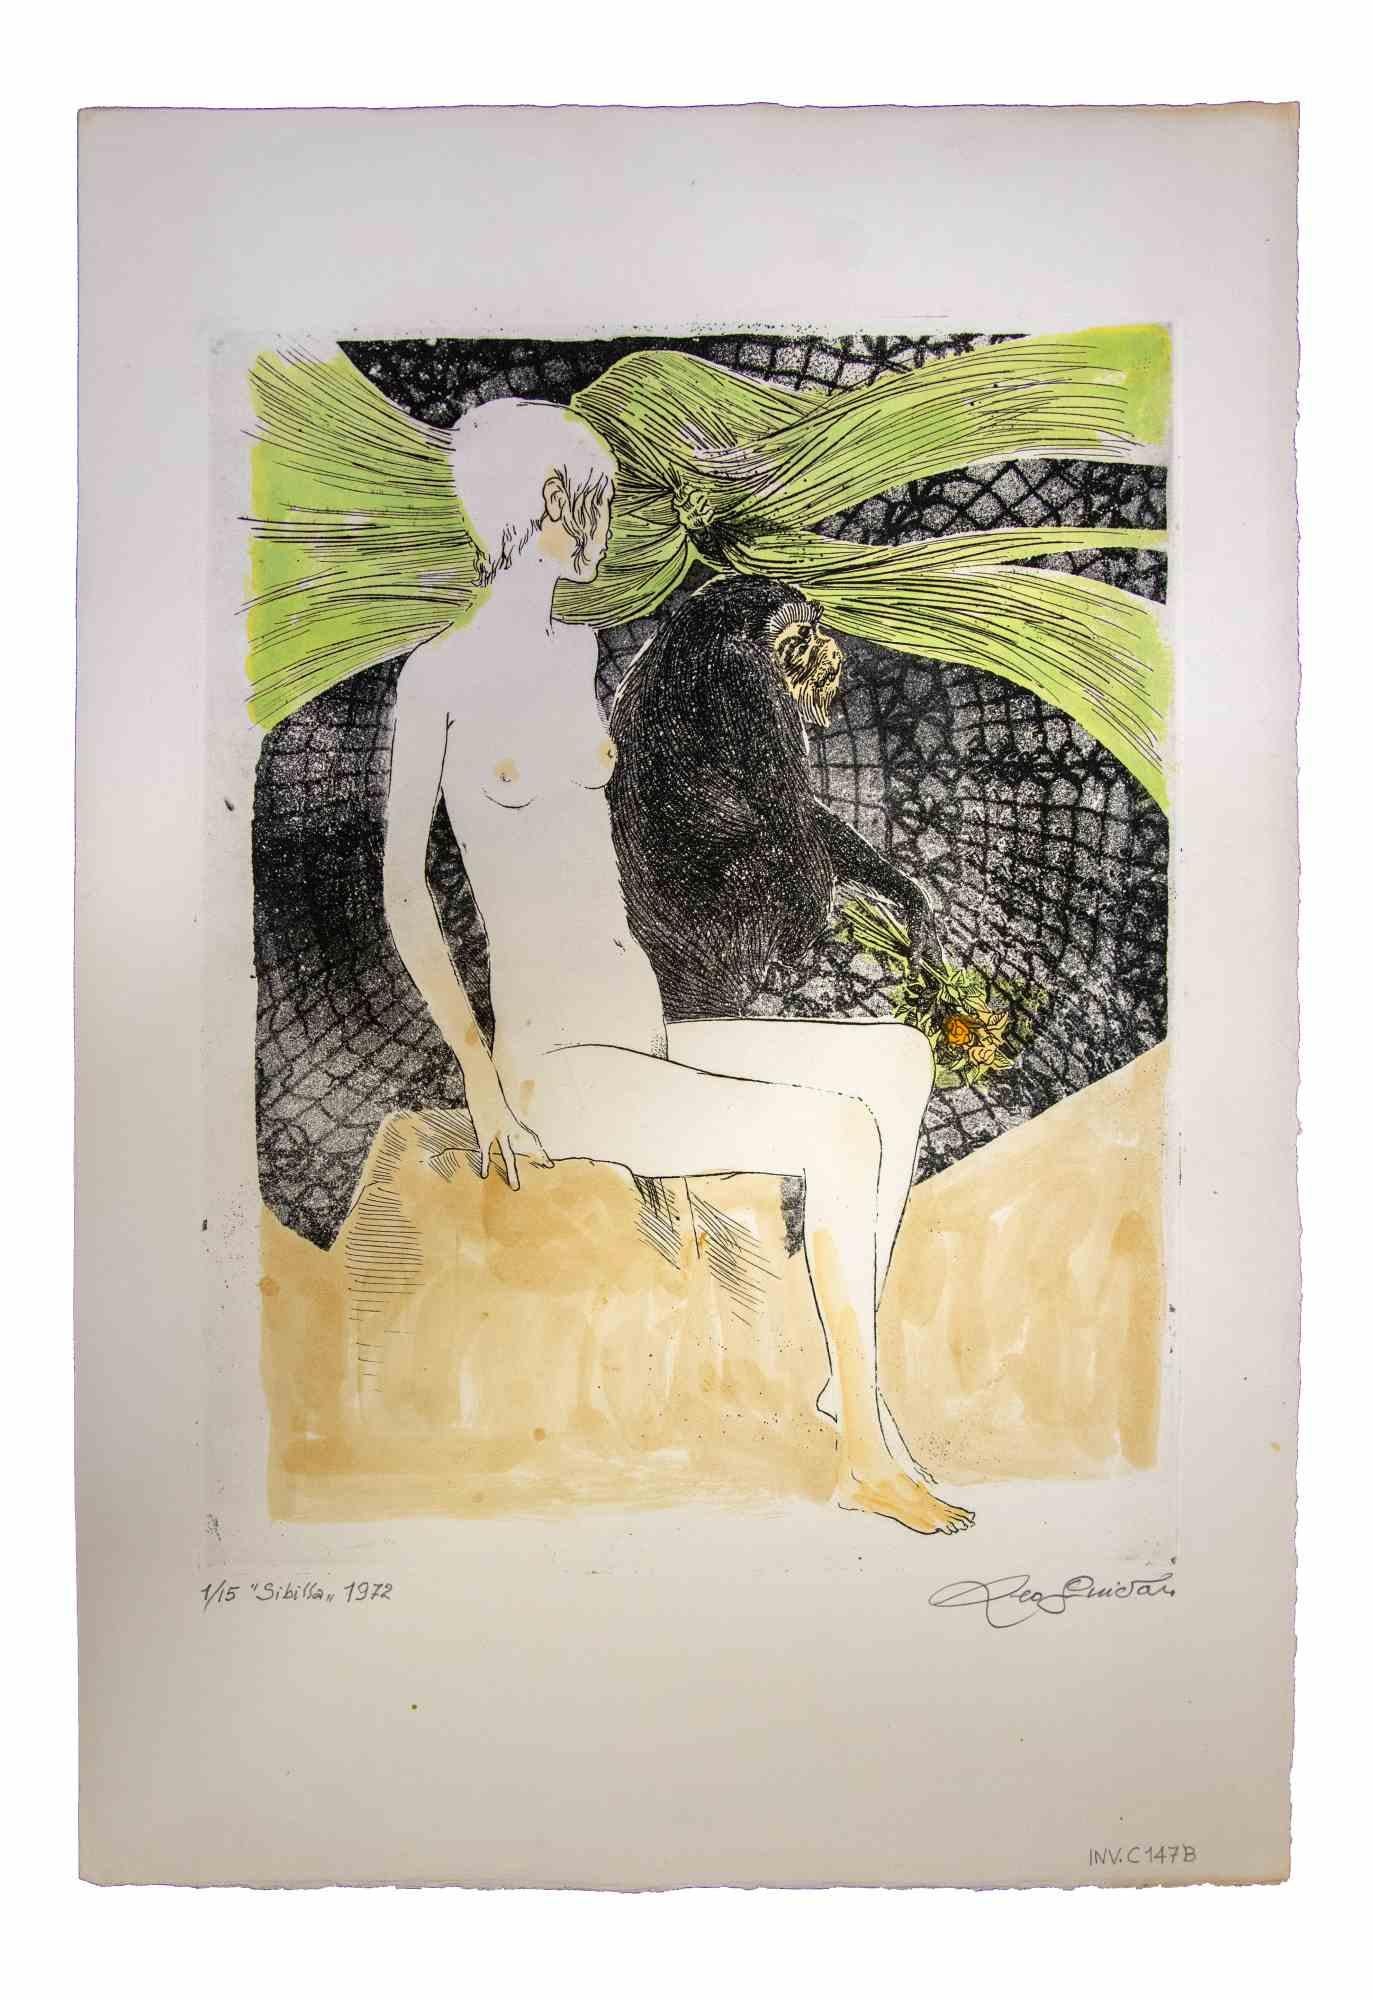 Sybil - Original Print by Leo Guida - 1972